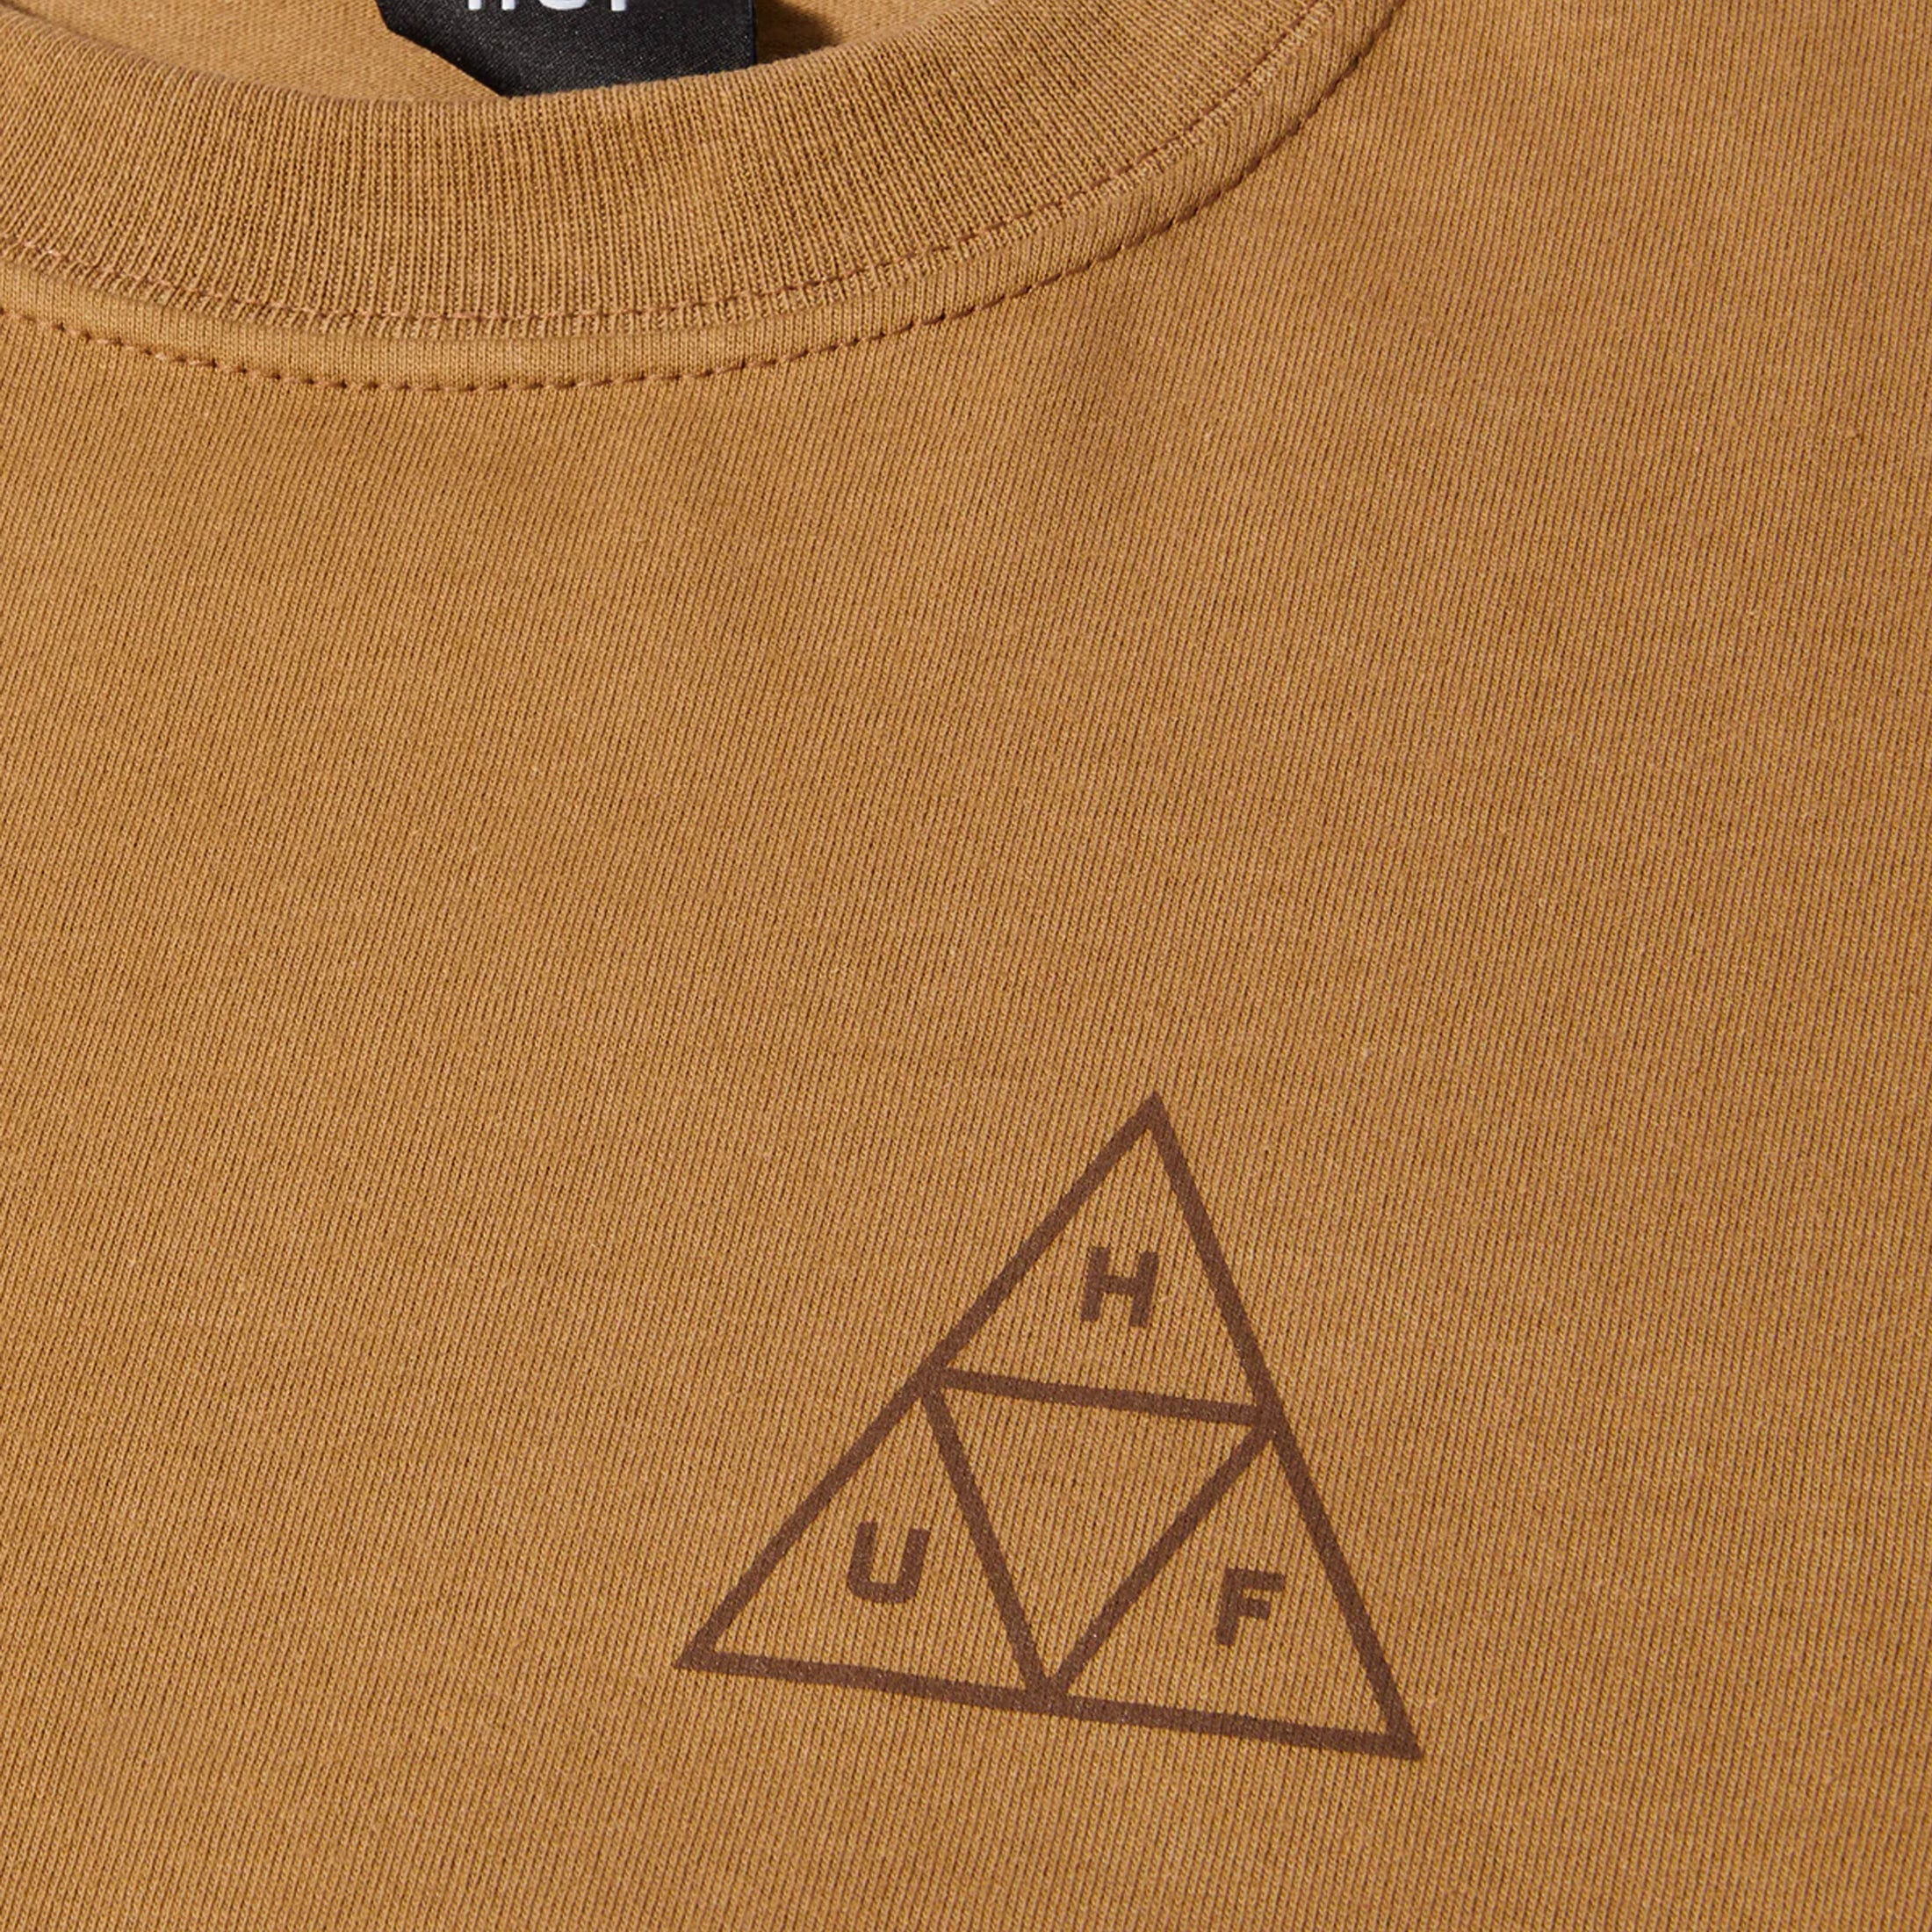 Huf Set Triple Triangle Long Sleeve T-Shirt Camel